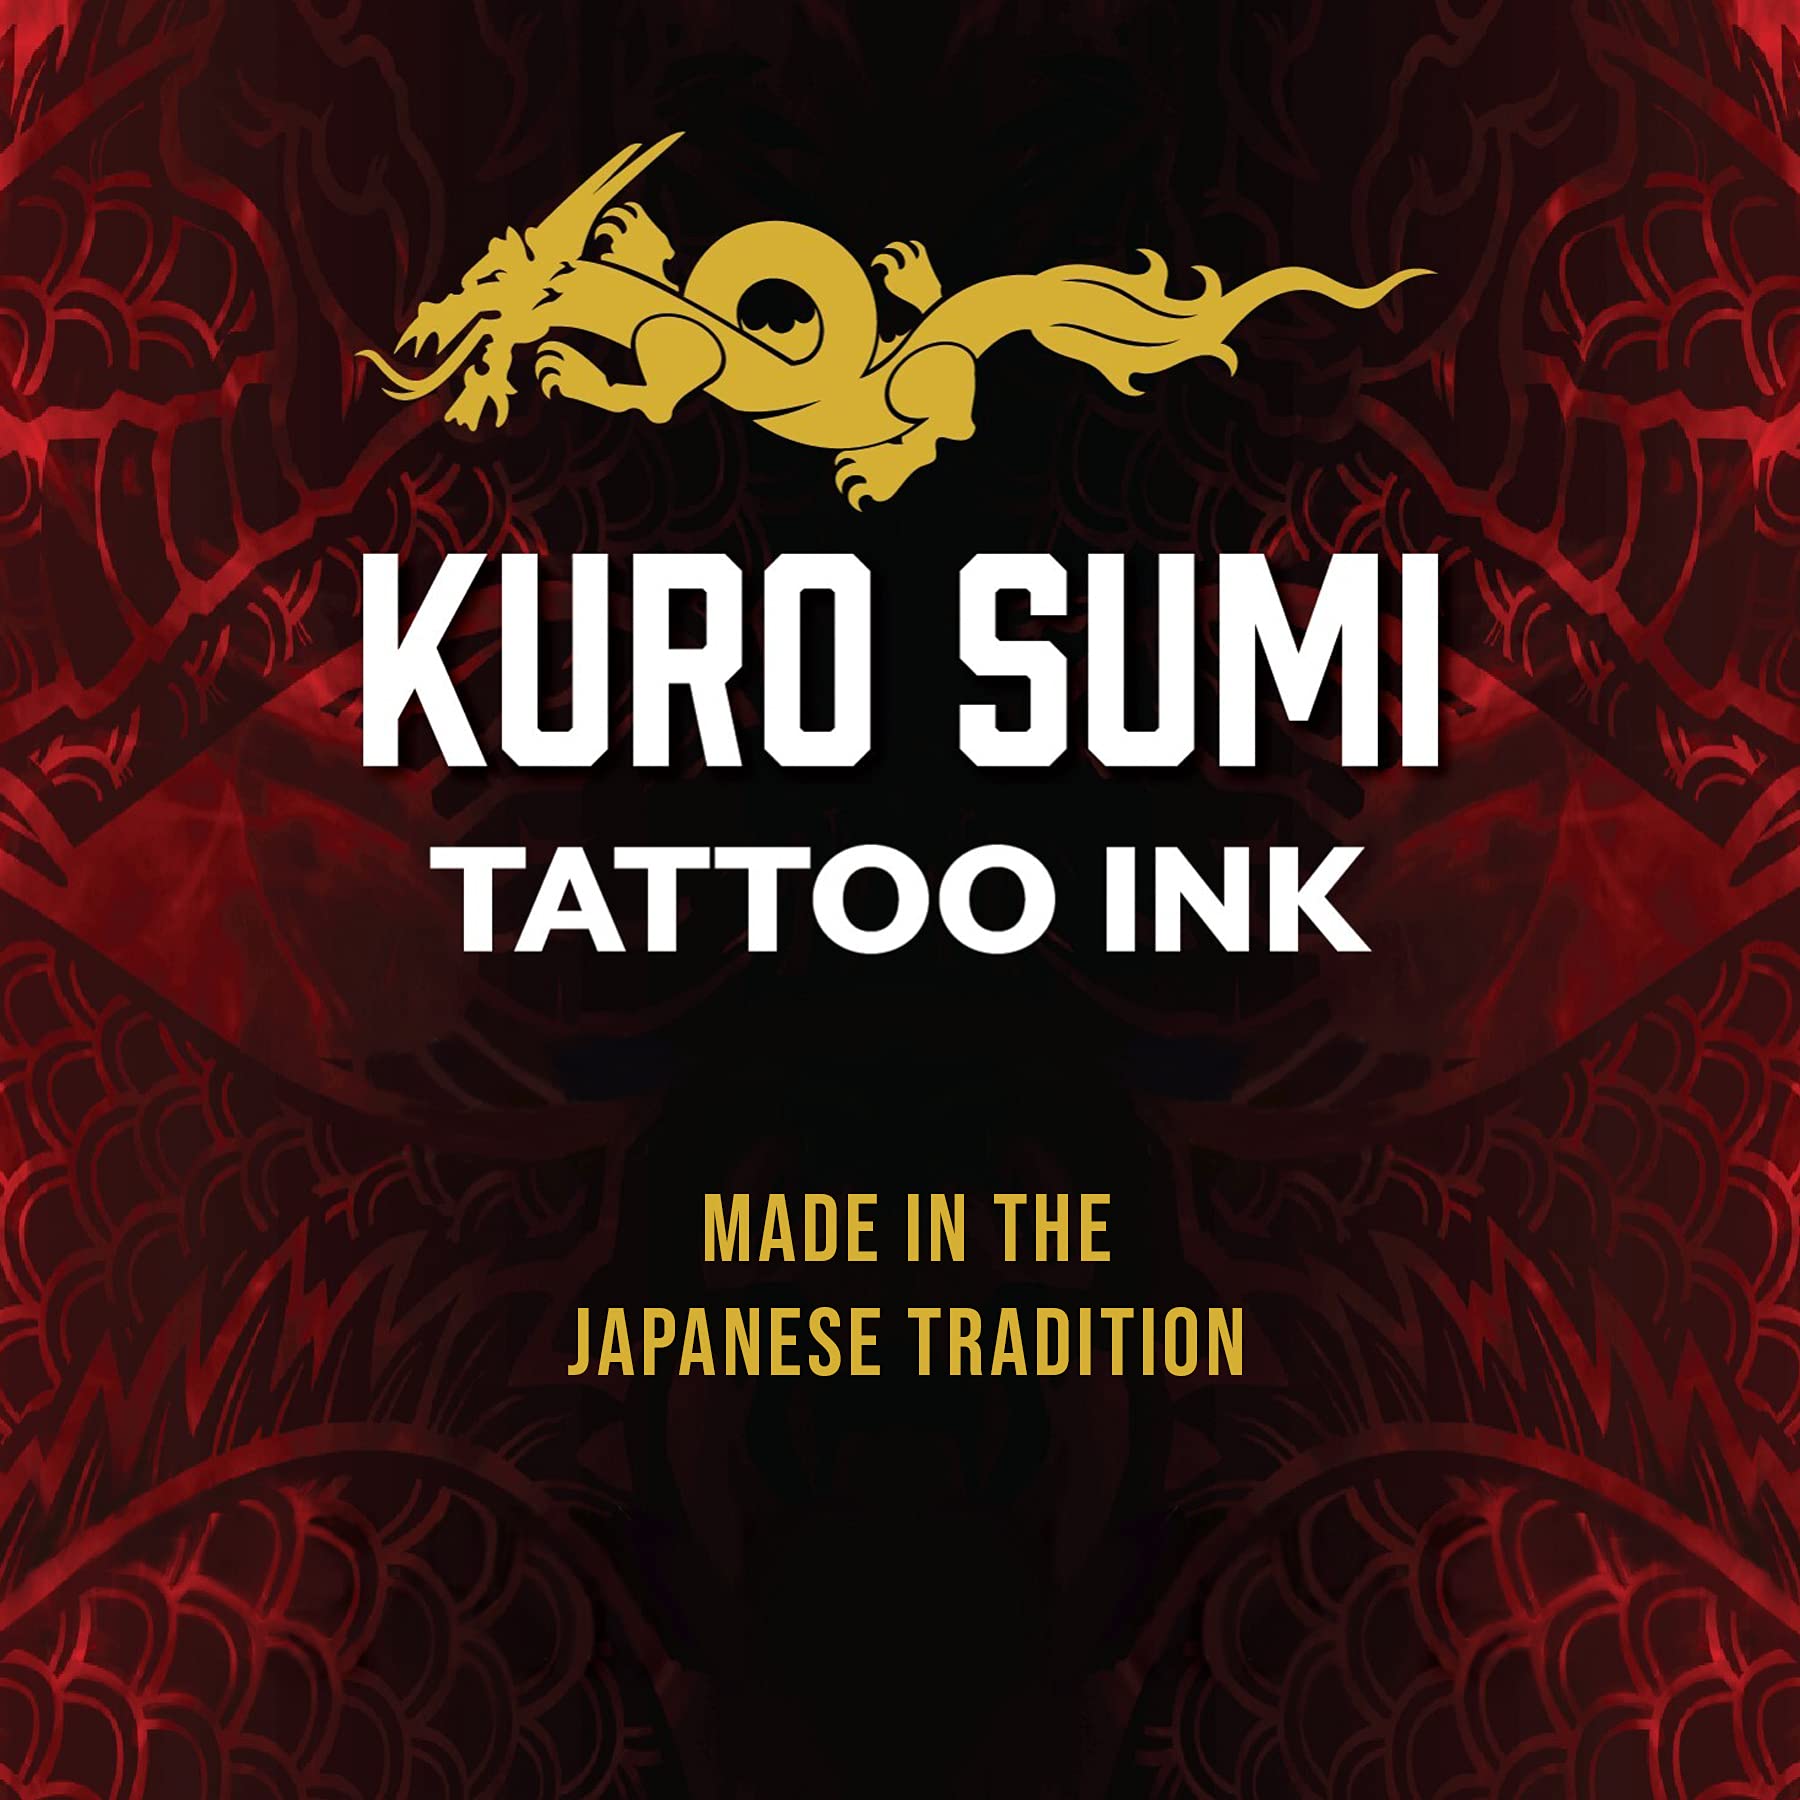 Kuro Sumi - Outlining Black Tattoo Ink - Professional Tattoo Ink & Tattoo Supplies for Outlining & Shading - Skin-Safe Permanent Tattooing - Vegan (6 oz)